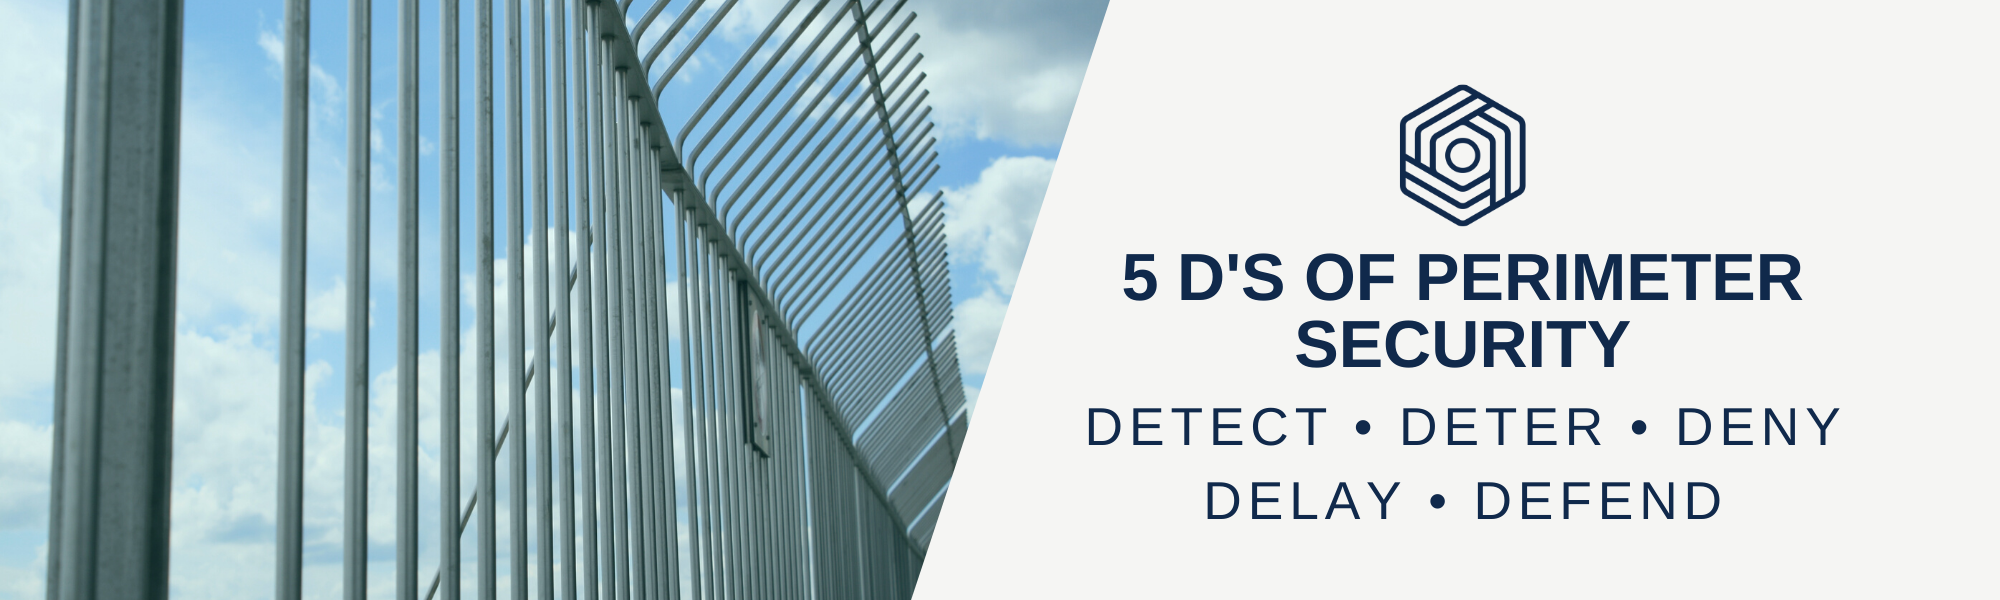 5 D's of Perimeter Security: Detect - Deter - Deny - Delay - Defend